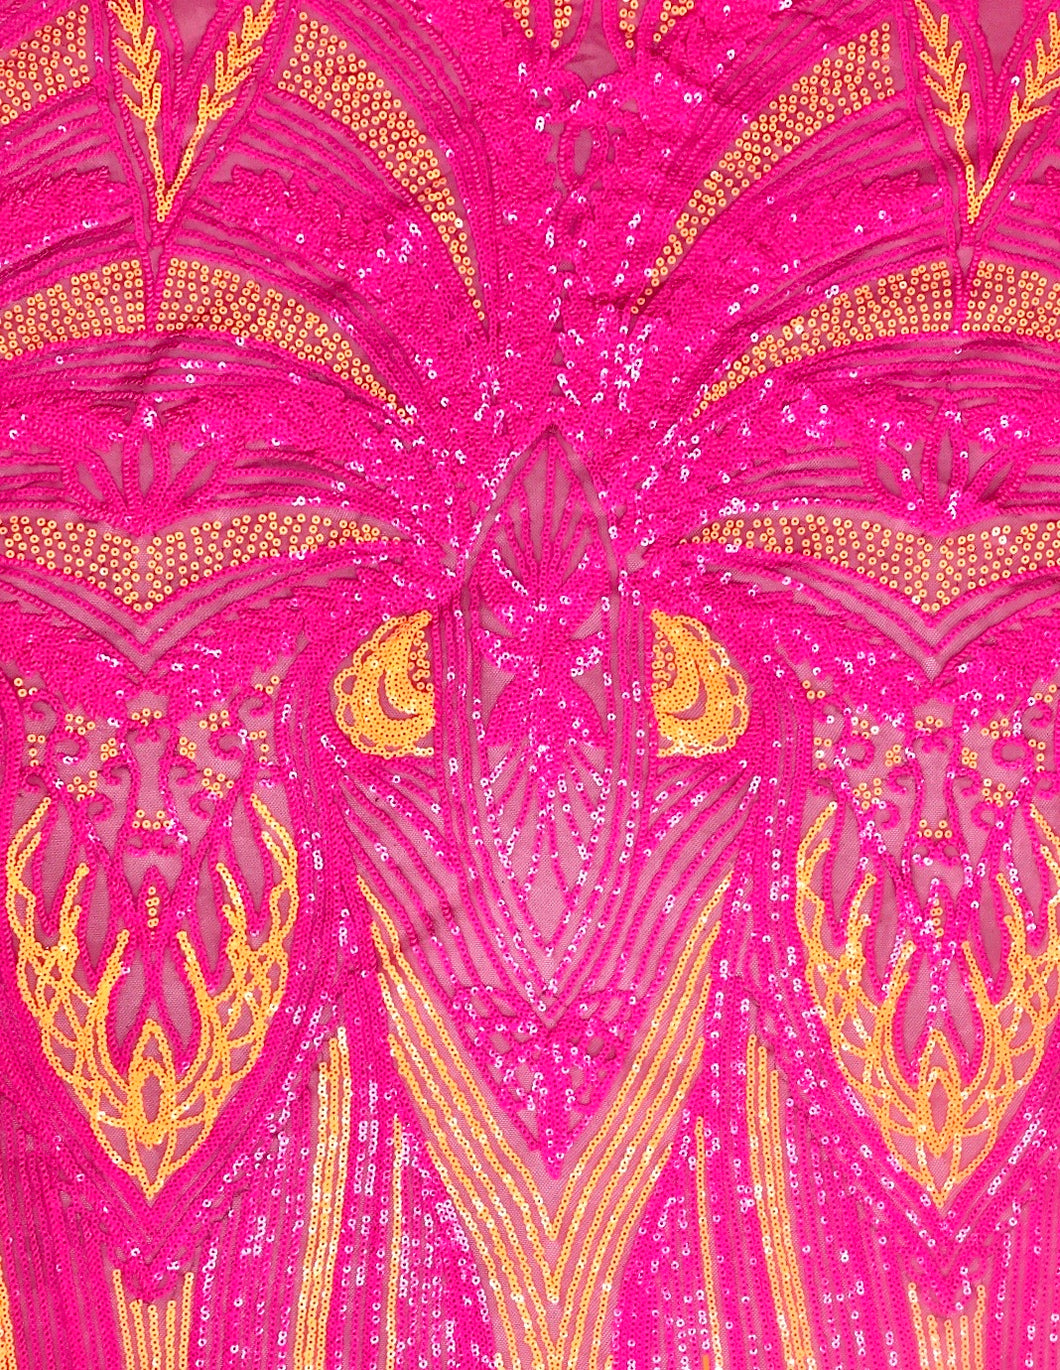 Hot Pink & Orange Carnival Sequin on Mesh Stretch